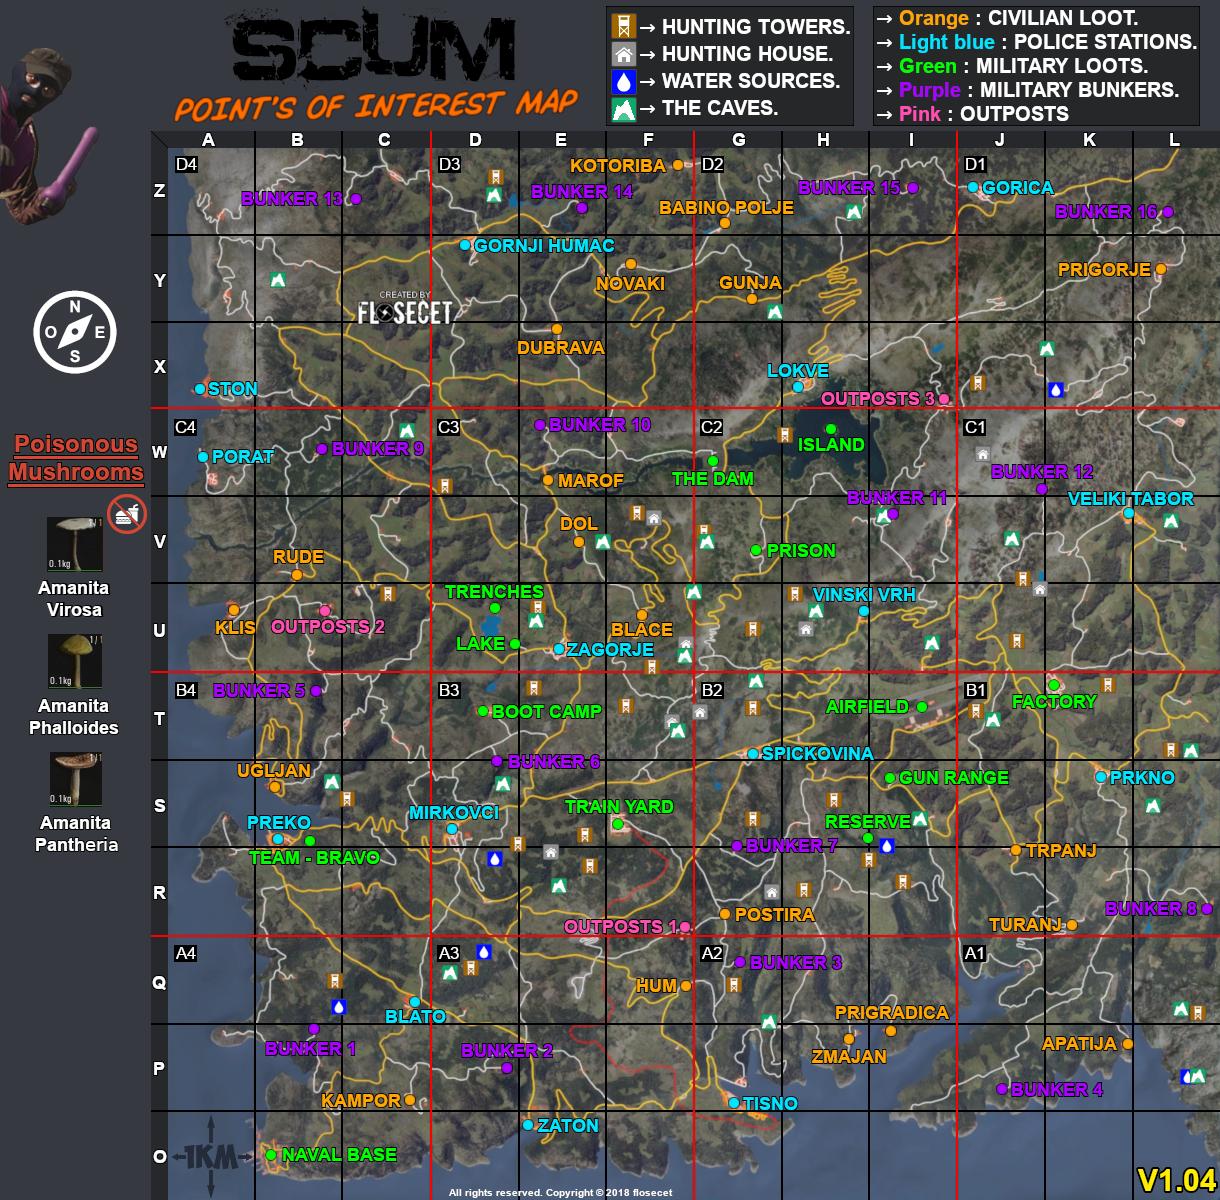 scum map ww2 bunkers